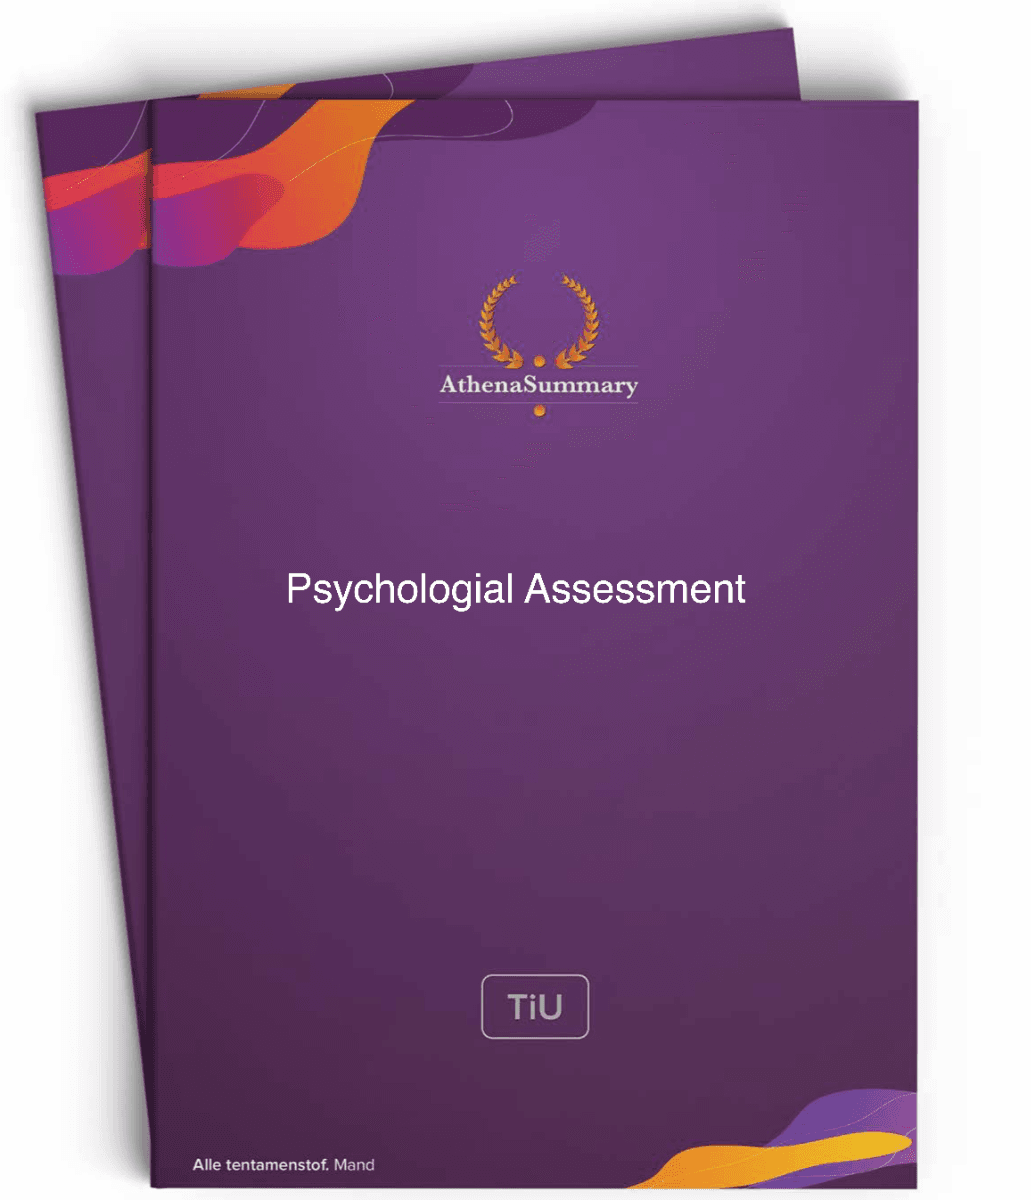 Literature Summary: Psychological Assessment